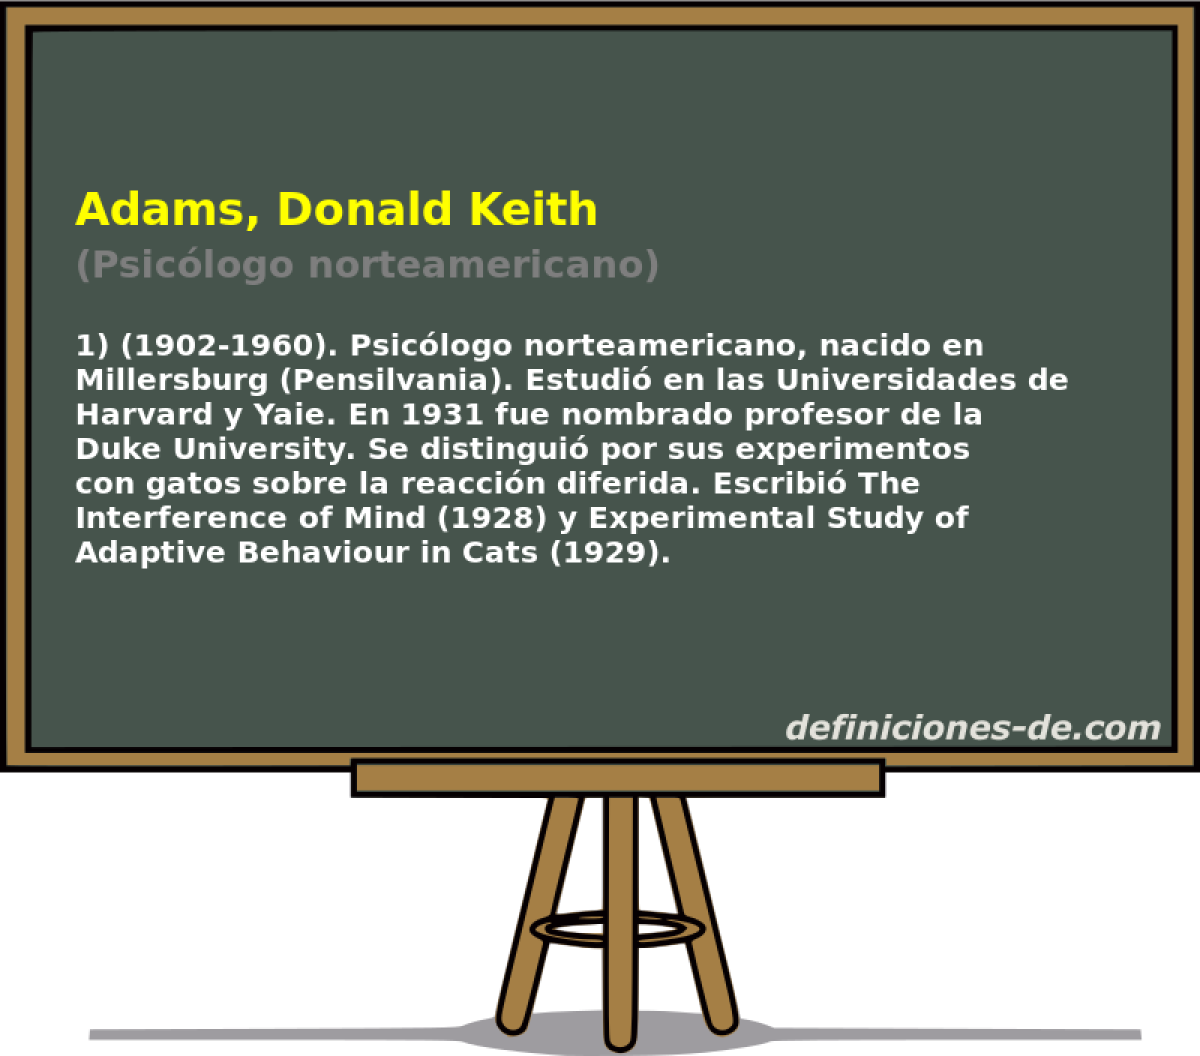 Adams, Donald Keith (Psiclogo norteamericano)